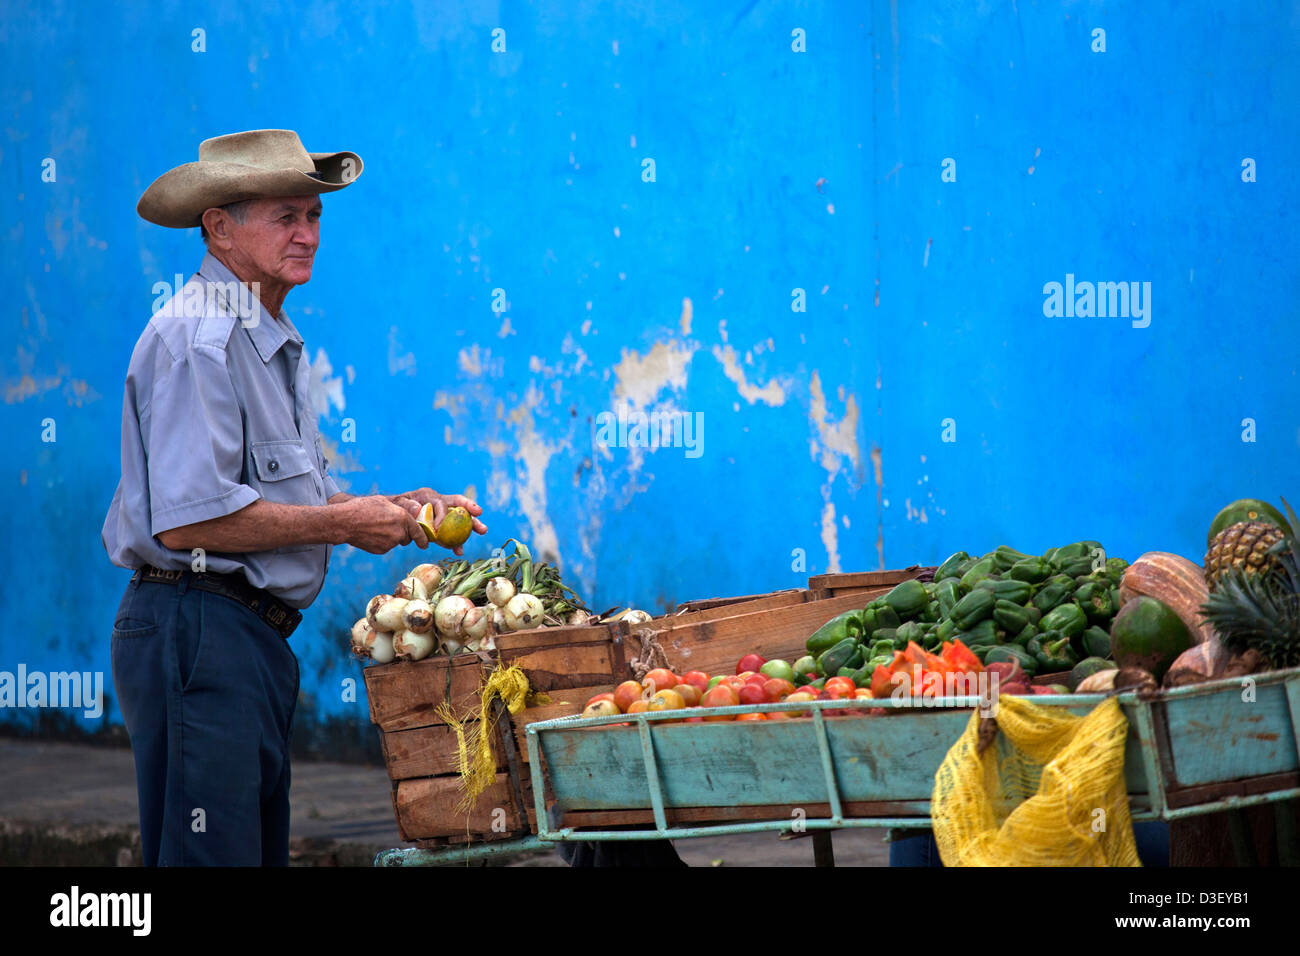 Cuban vendor selling fresh fruit and vegetables at market stall in Viñales, Cuba, Caribbean Stock Photo